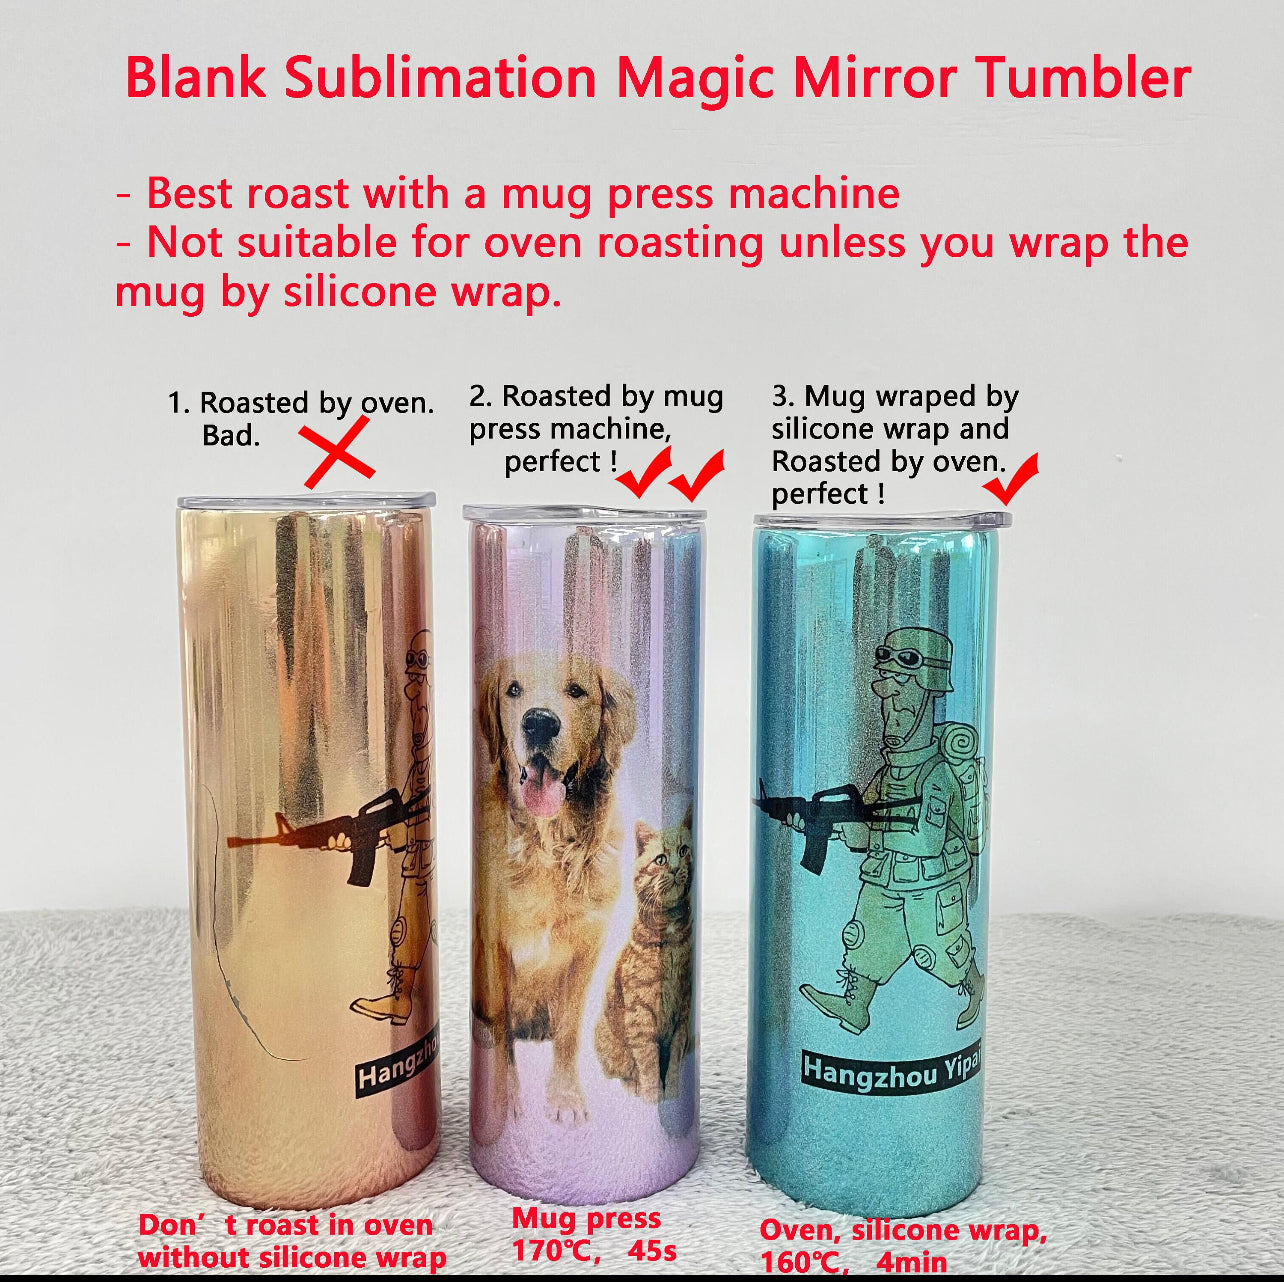 Holographic Glitter Mirror 20oz Straight Skinny Sublimation Tumbler